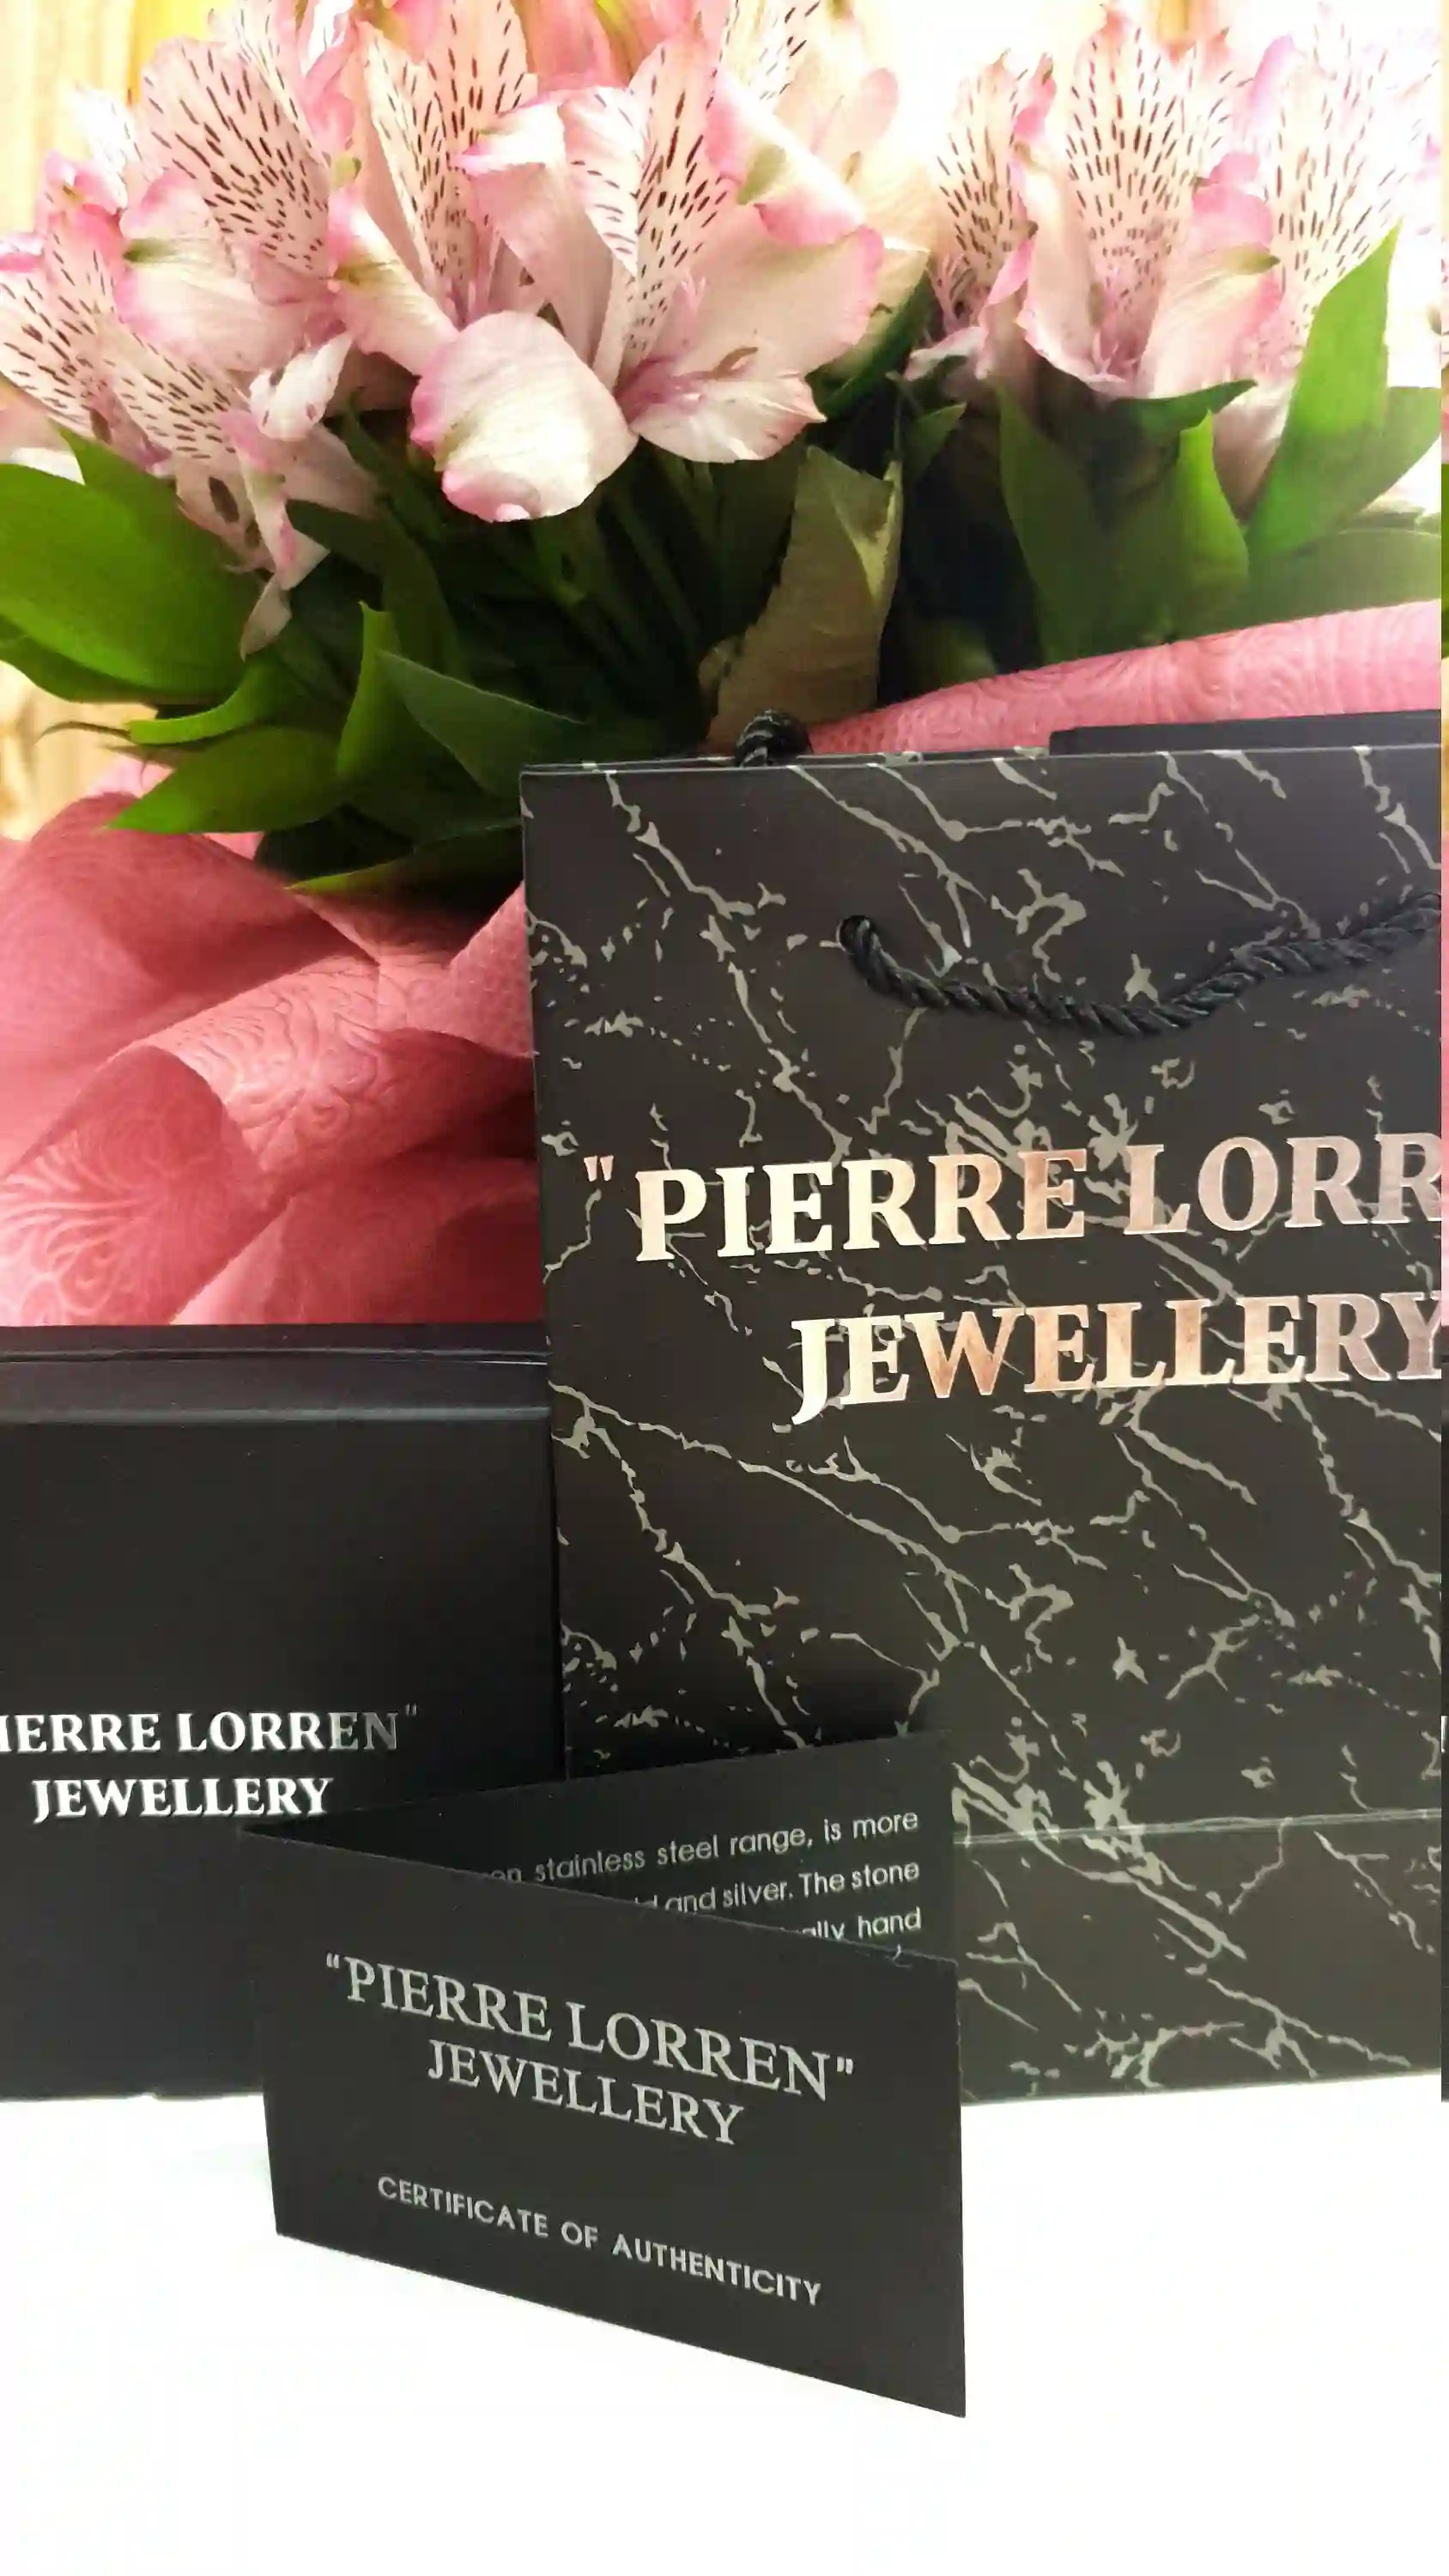 Sparkling Bracelet Formal SWAROVKSI Crystal Jewelry Gift for Her Birthday Gift Anniversary 96 HANDSET Diamond DESIGNER Jewelry pierrelorren 